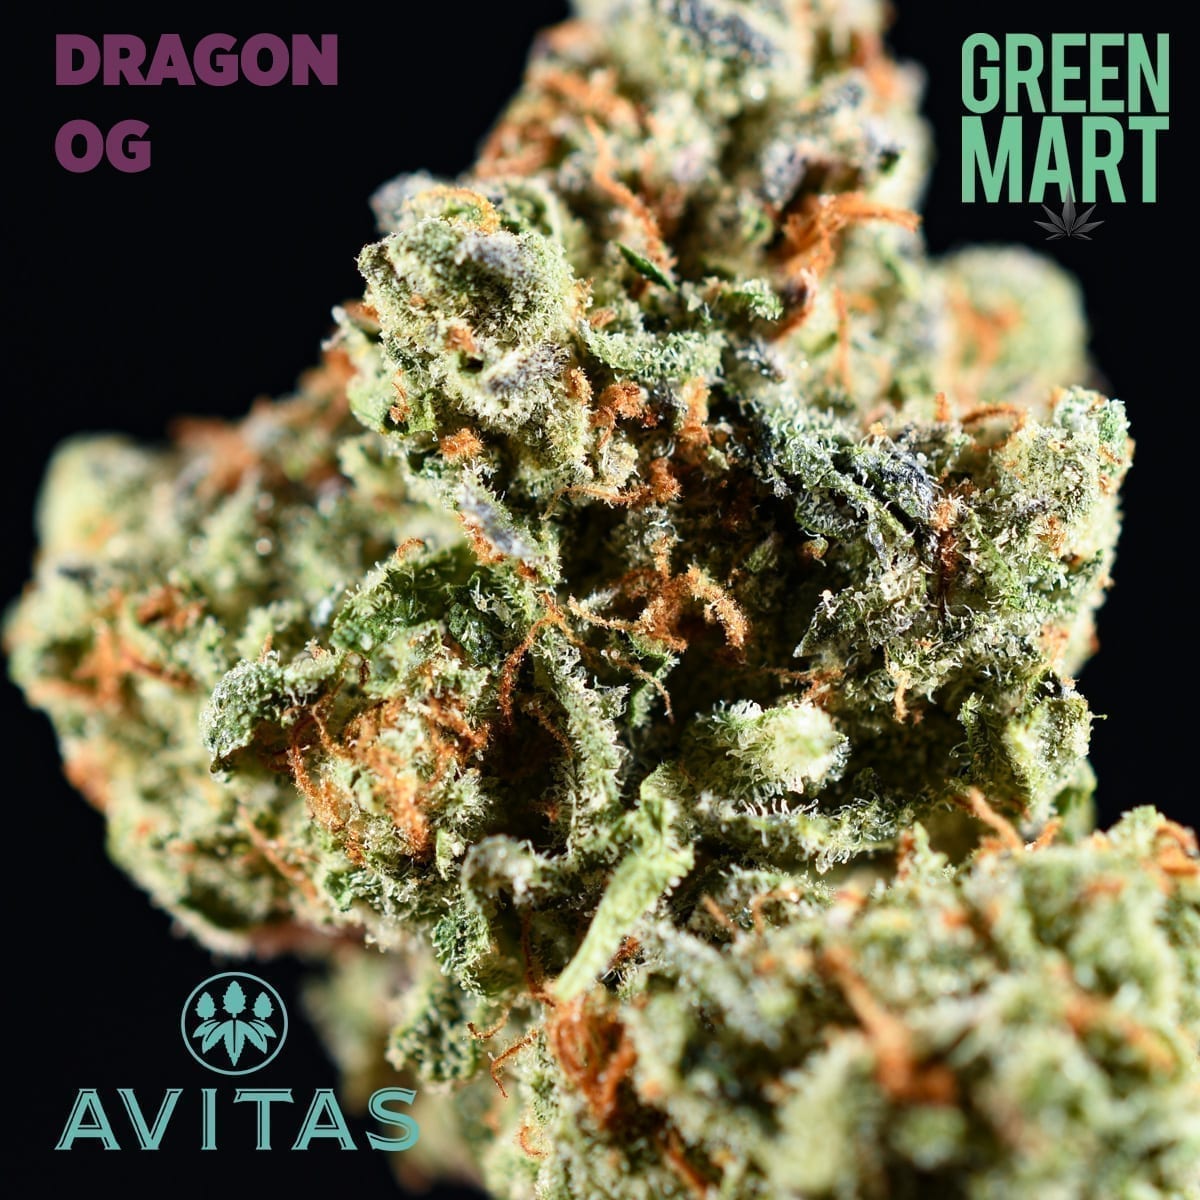 Dragon OG by Avitas